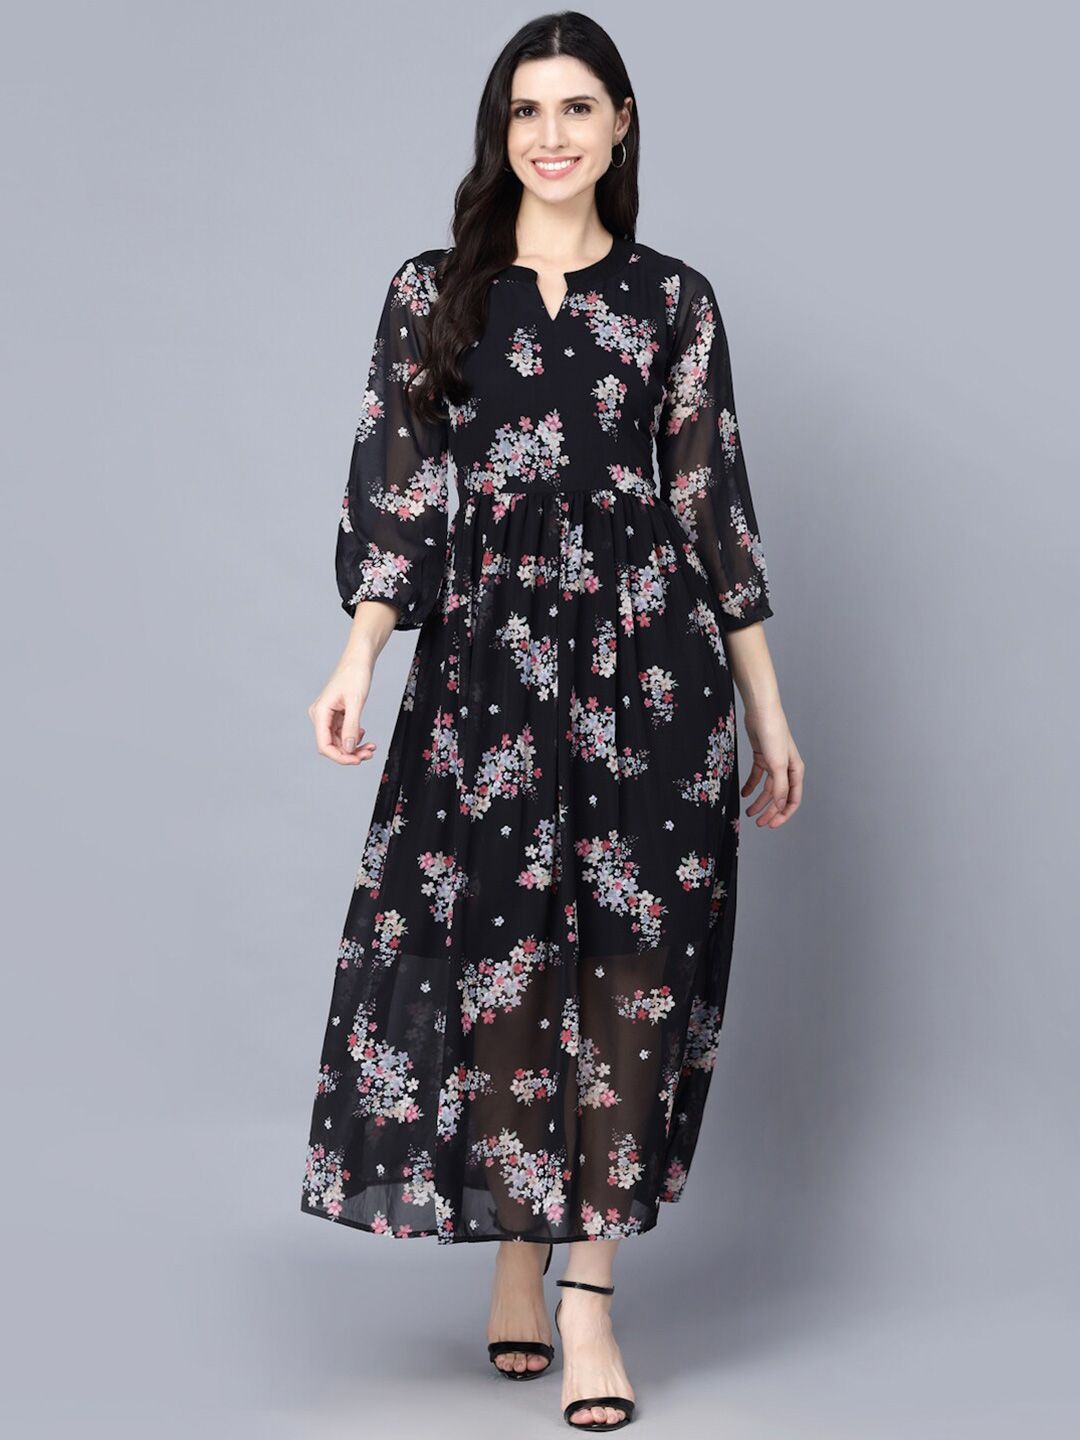 Myshka Black Floral Keyhole Neck Georgette Maxi Dress Price in India